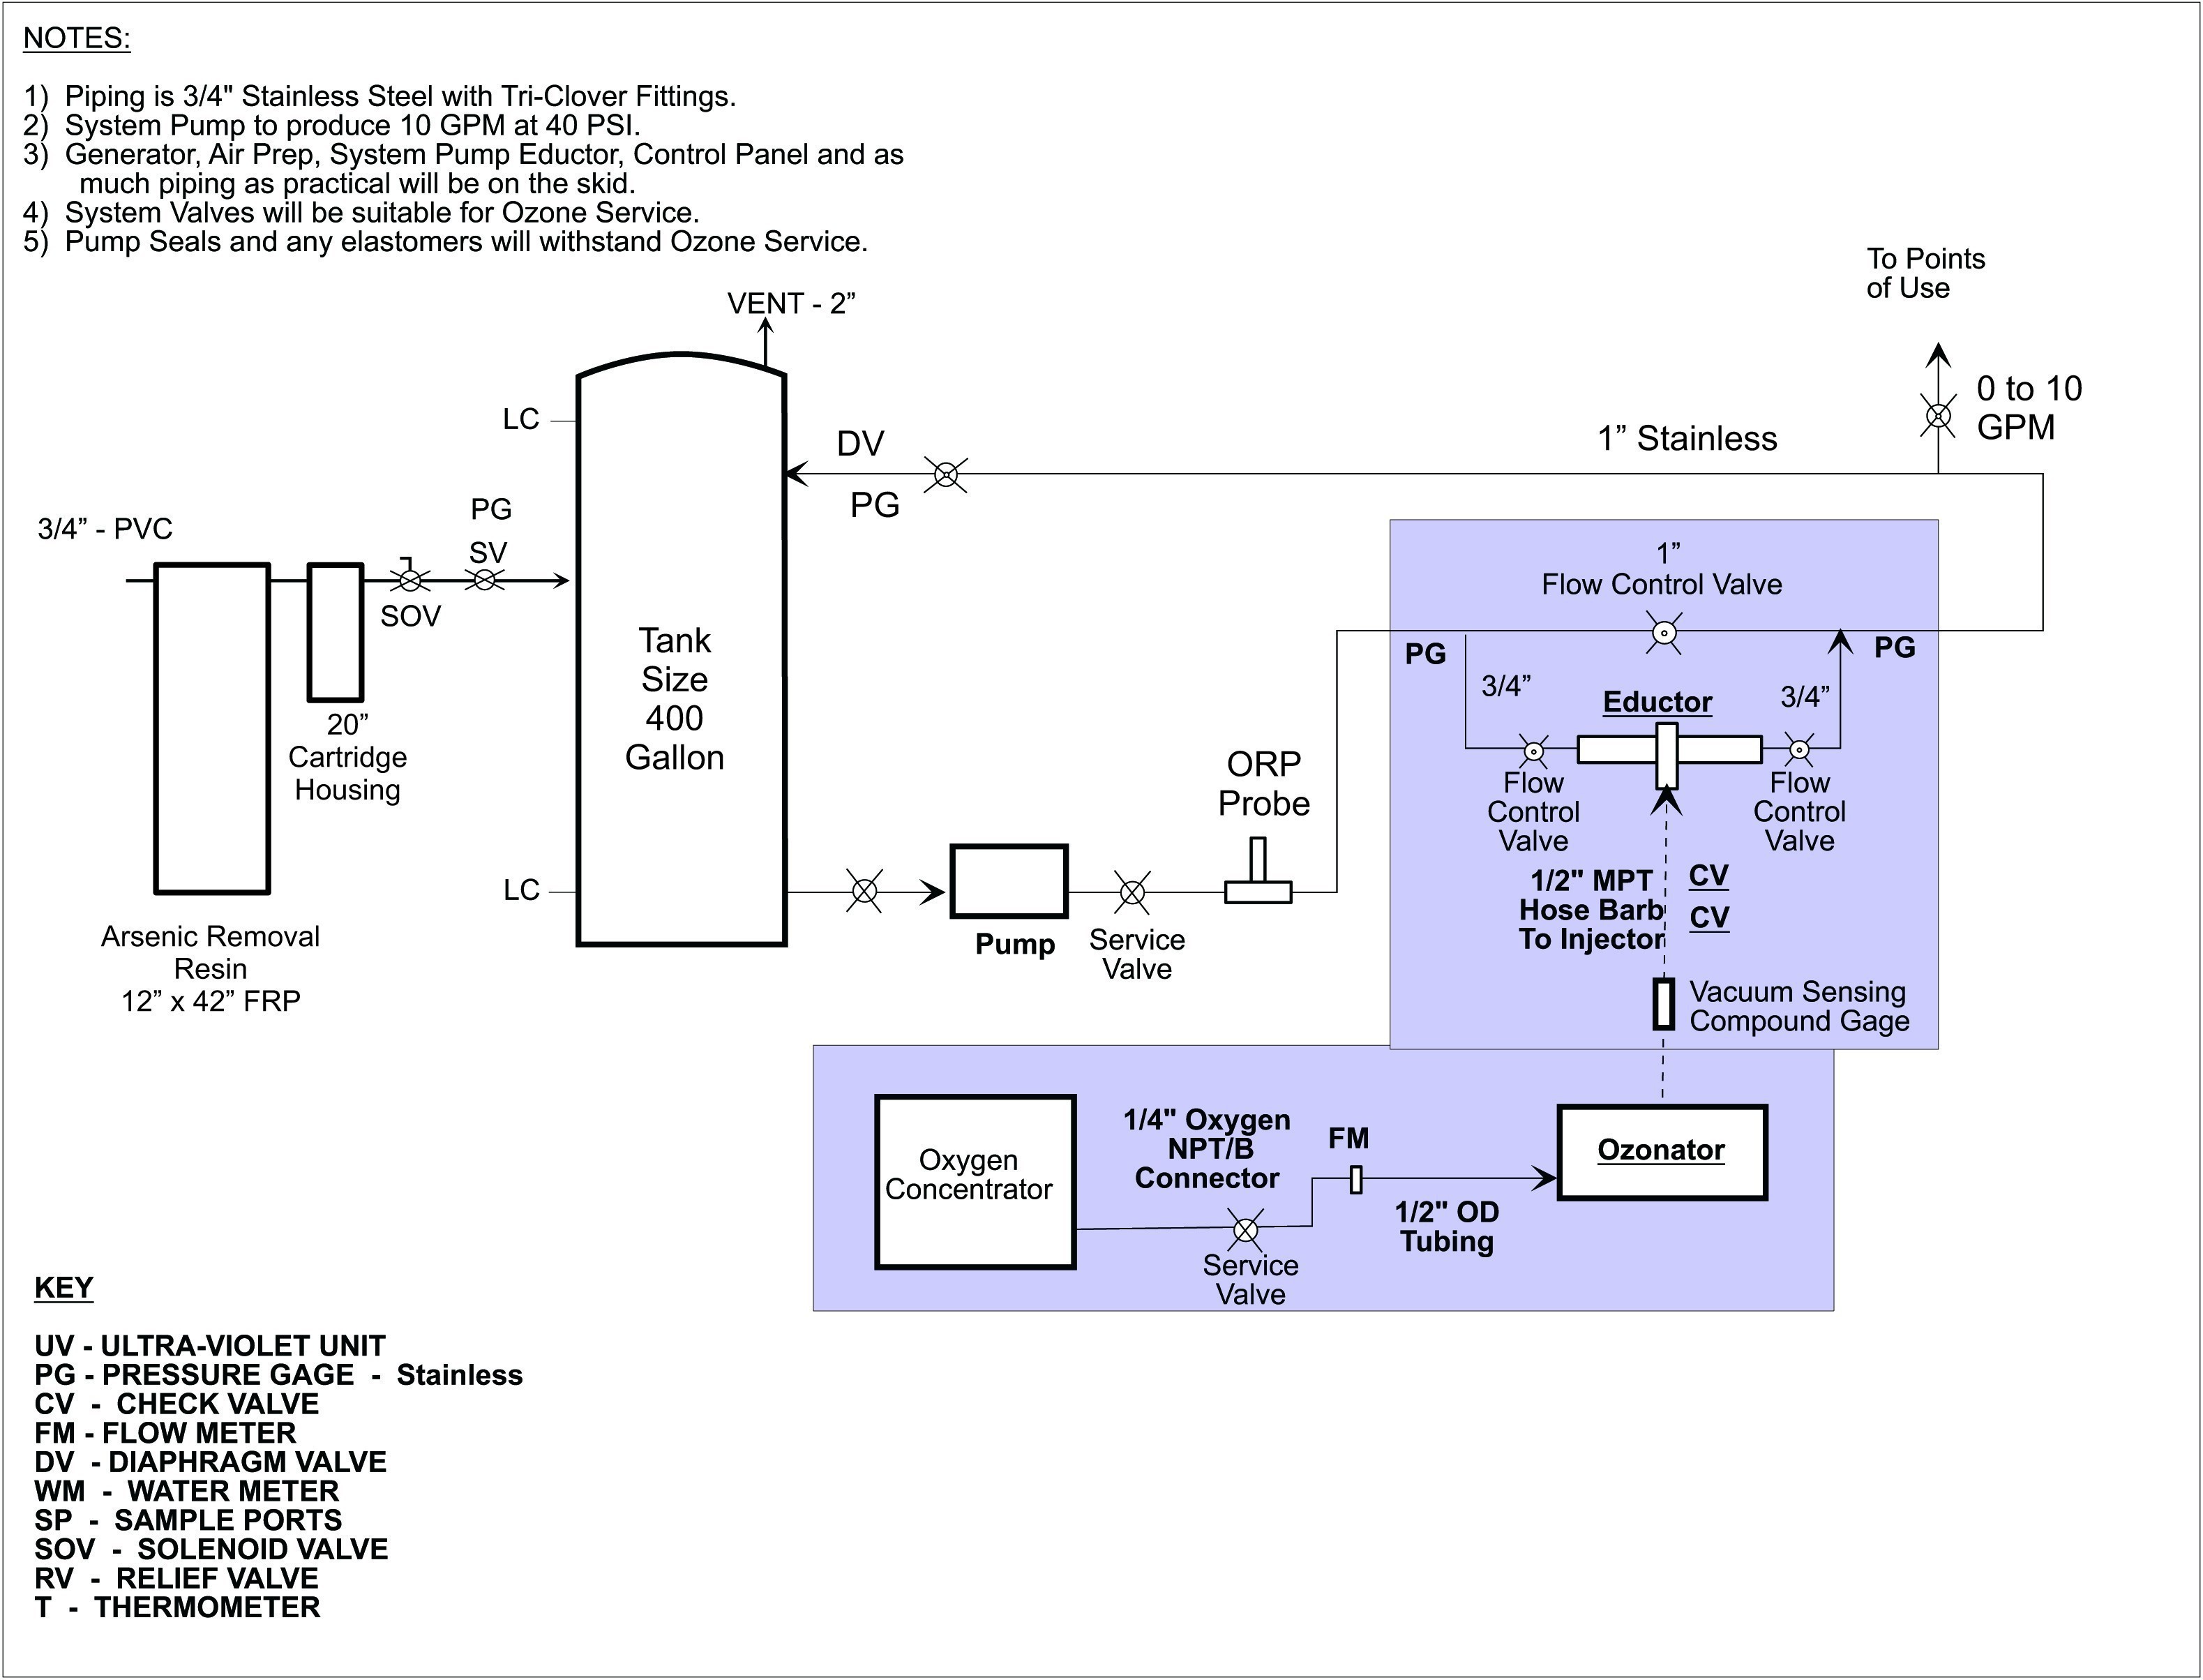 Wiring Diagram Trailer Plug 2019 Wiring Diagram for Trailer Hitch Plug Fresh Wiring Diagram Semi